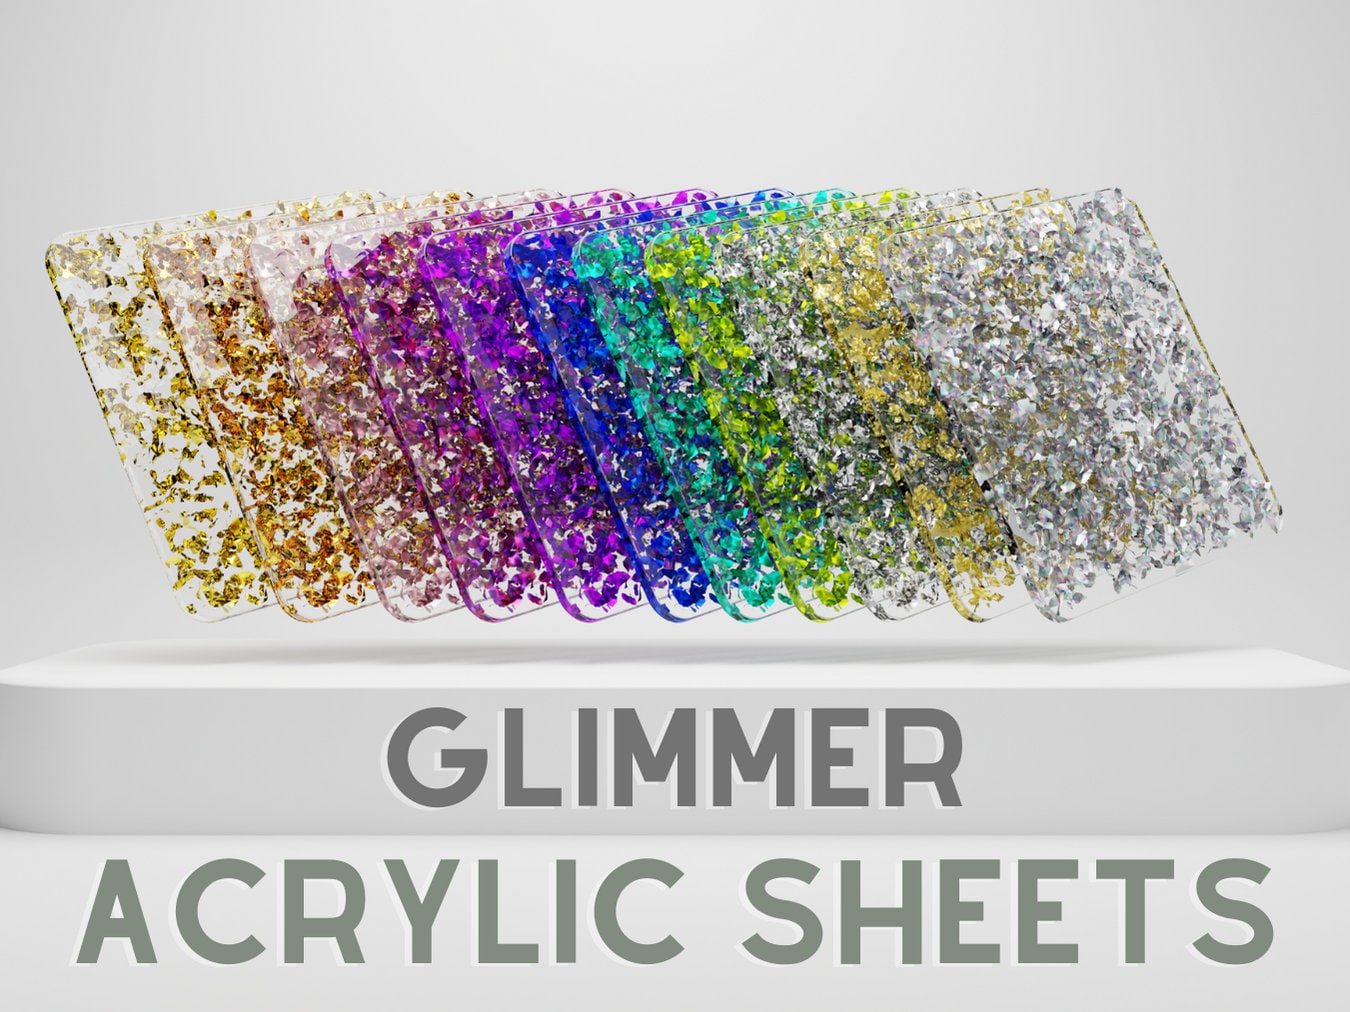 Clear Acrylic Sheet Glitter Confettil Laser Safe Cutting Glowforge Gold Acrylics  Sheets PMMA Laserable Plastic Blank Board Sparkle Rainbow 